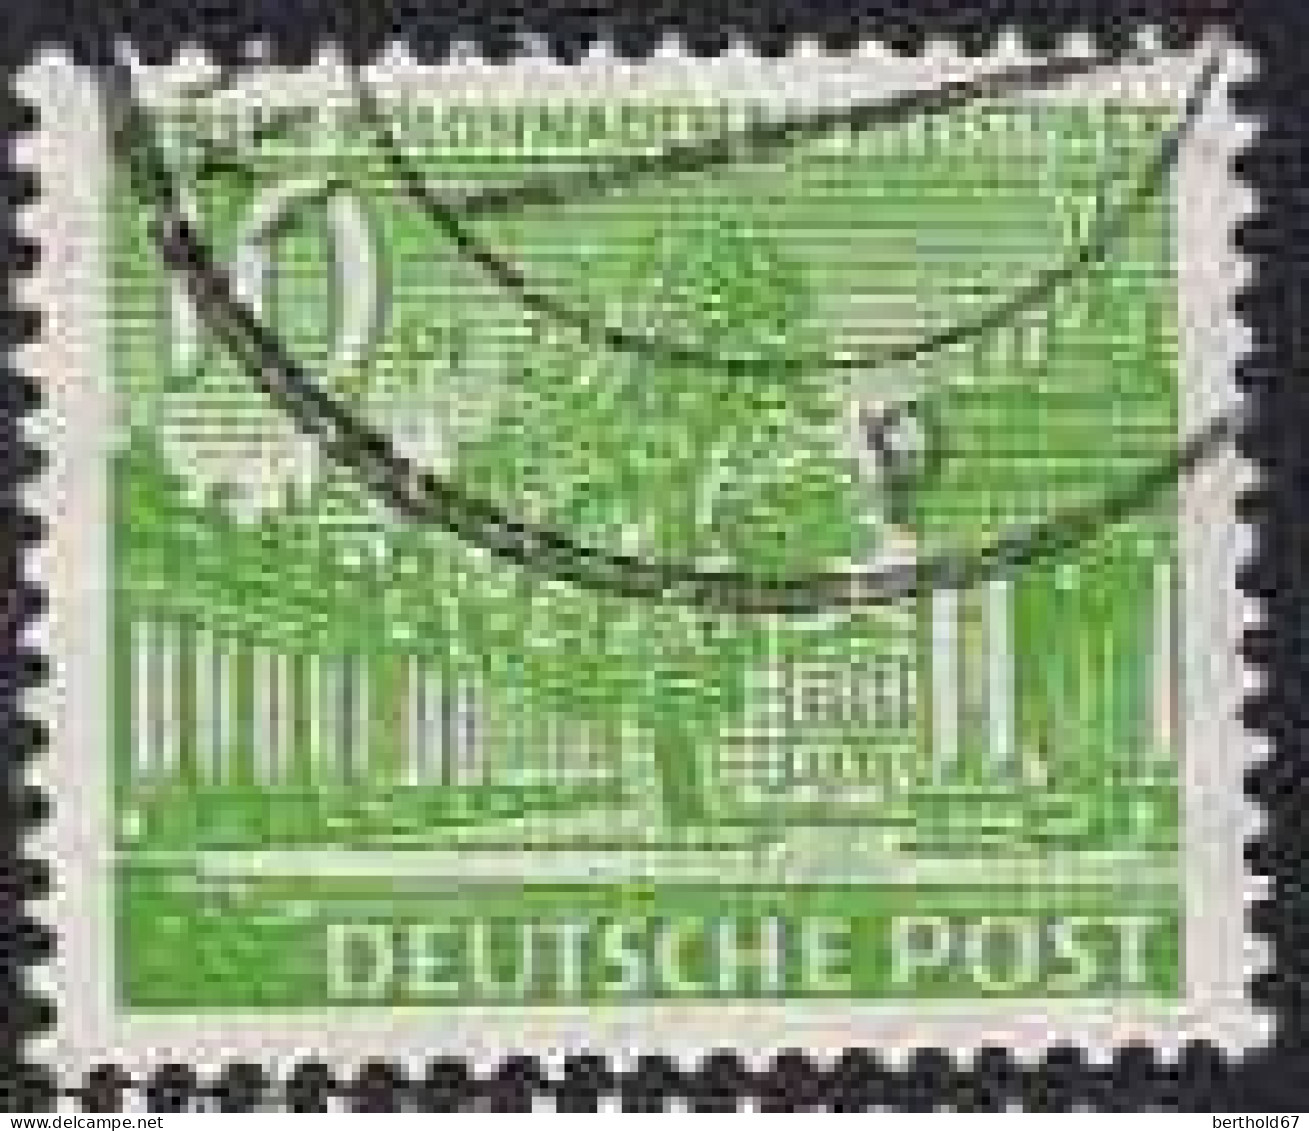 Berlin Poste Obl Yv: 33 Mi:47 Berlin-Kolonnaden Am Kleistpark (Beau Cachet Rond) - Oblitérés